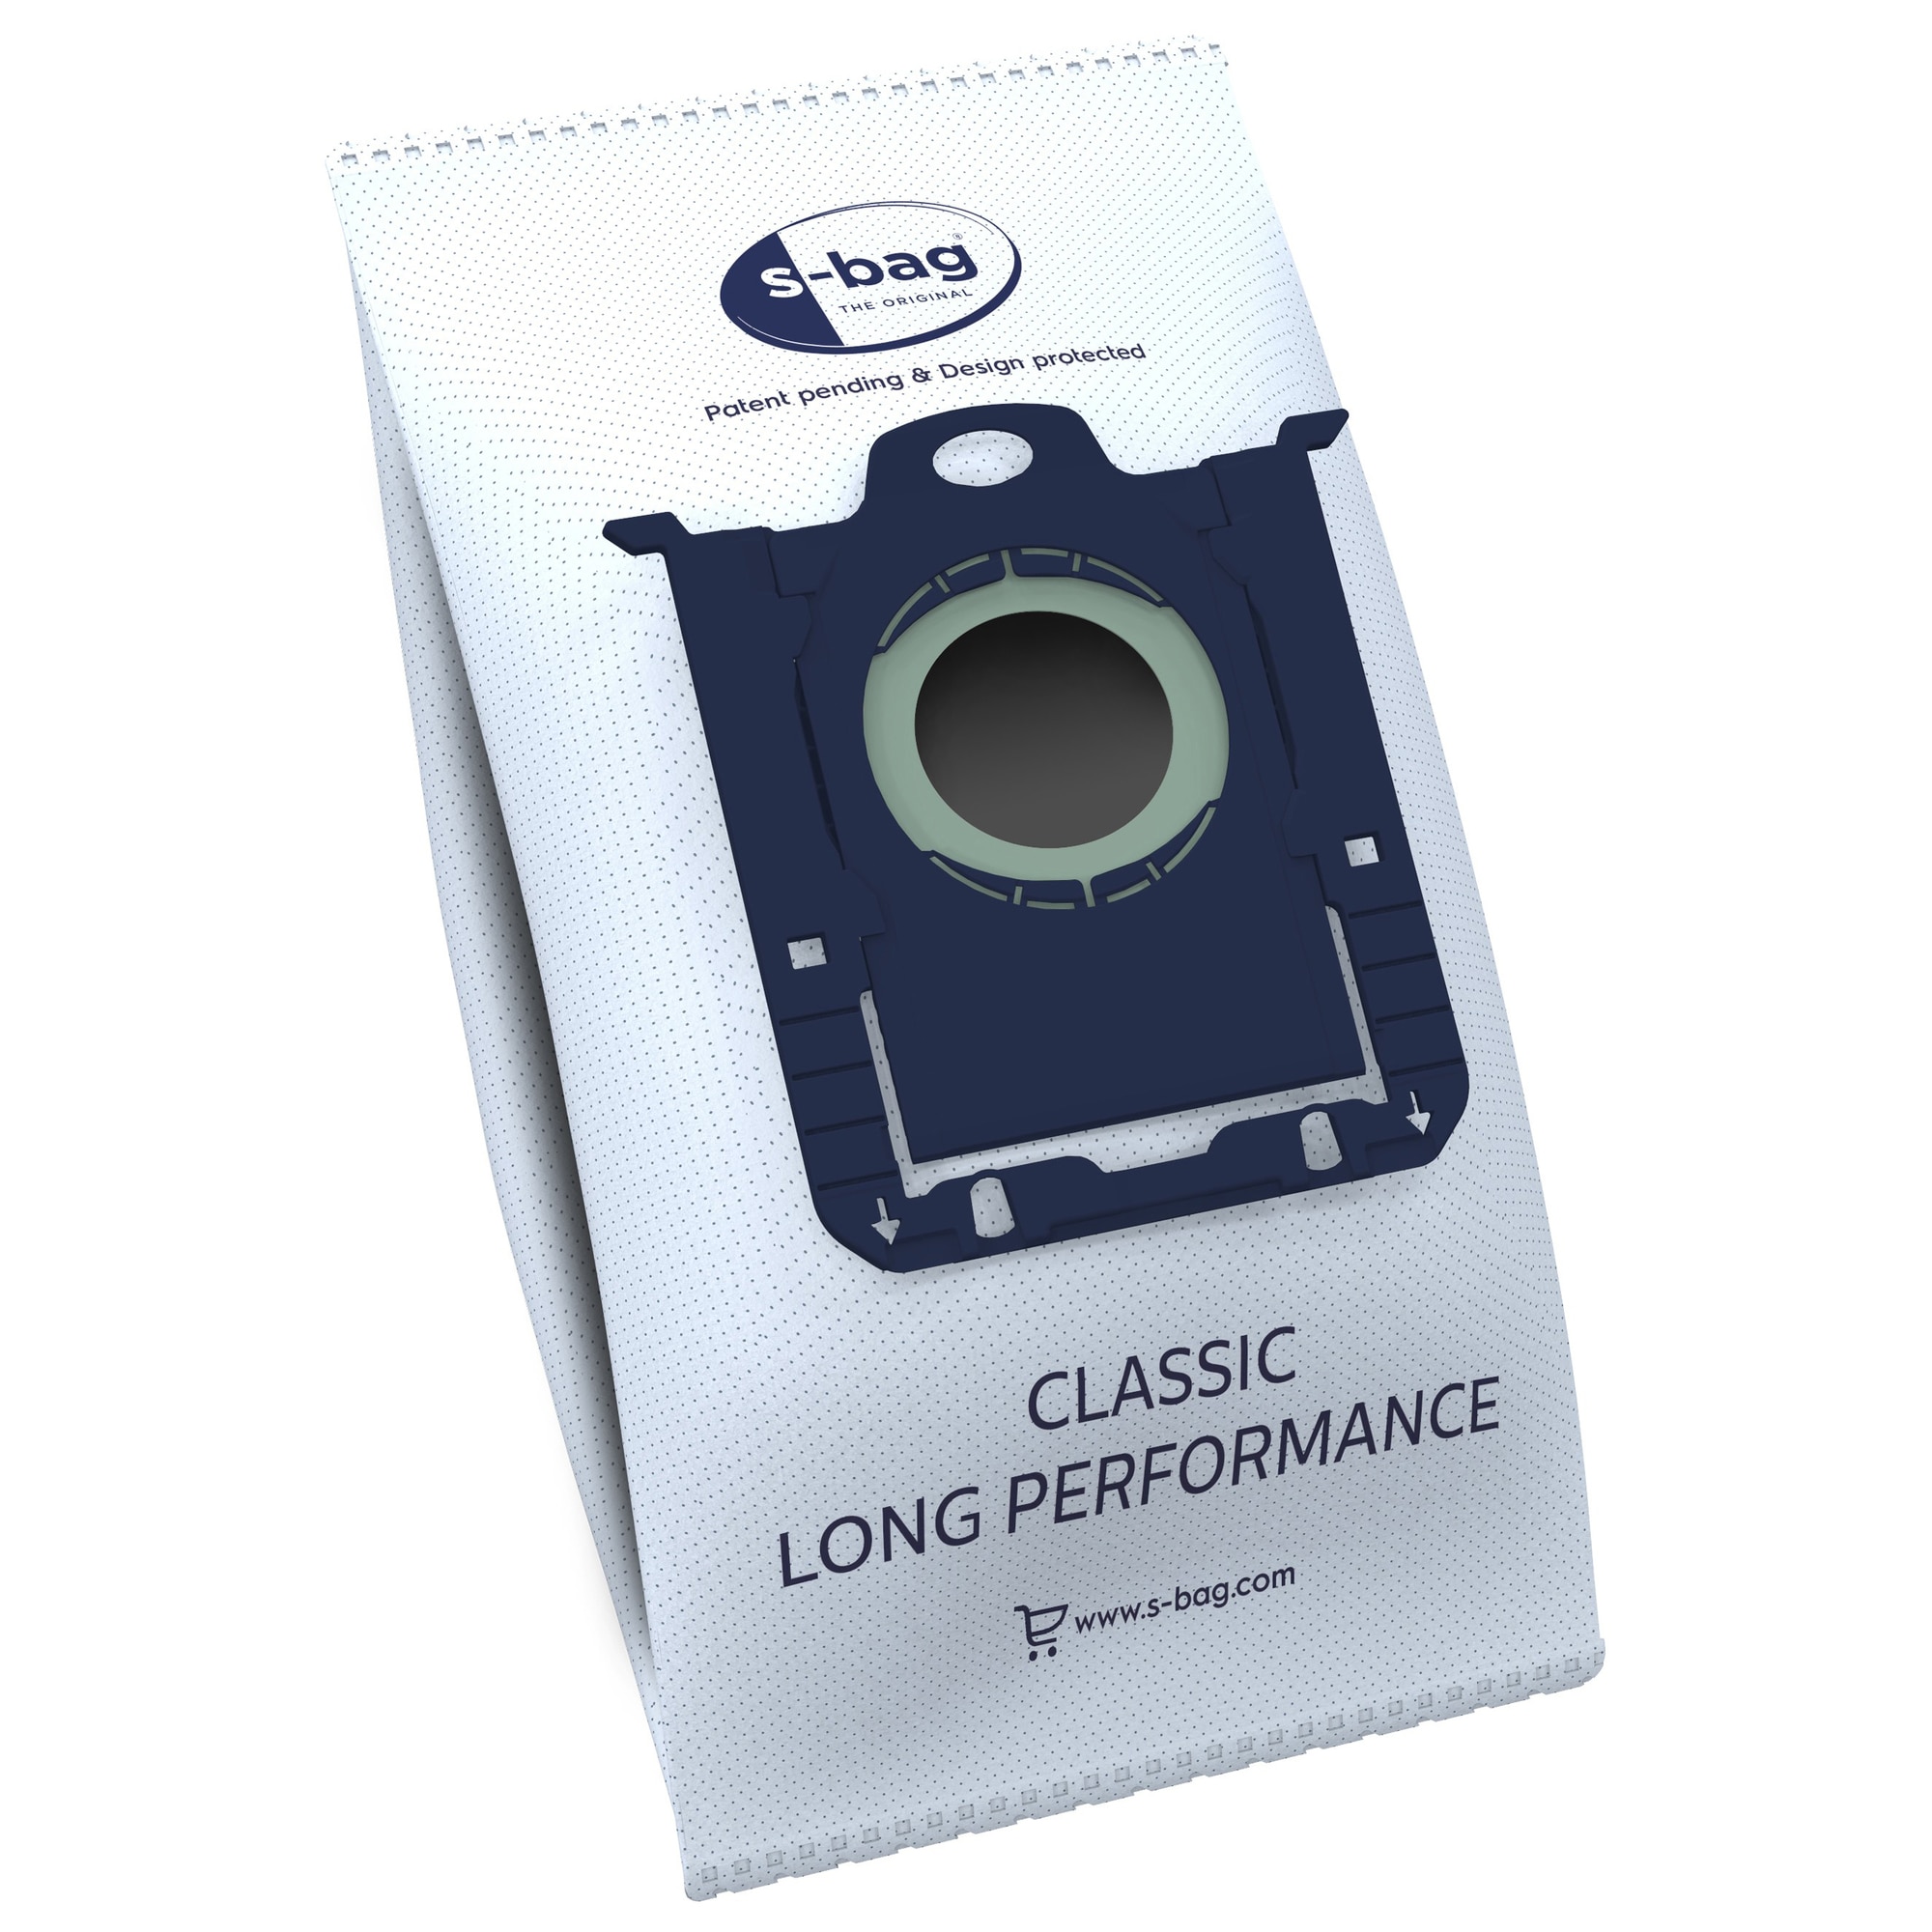 Electrolux/Philips S-bag Classic Long Performance støvsugerposer